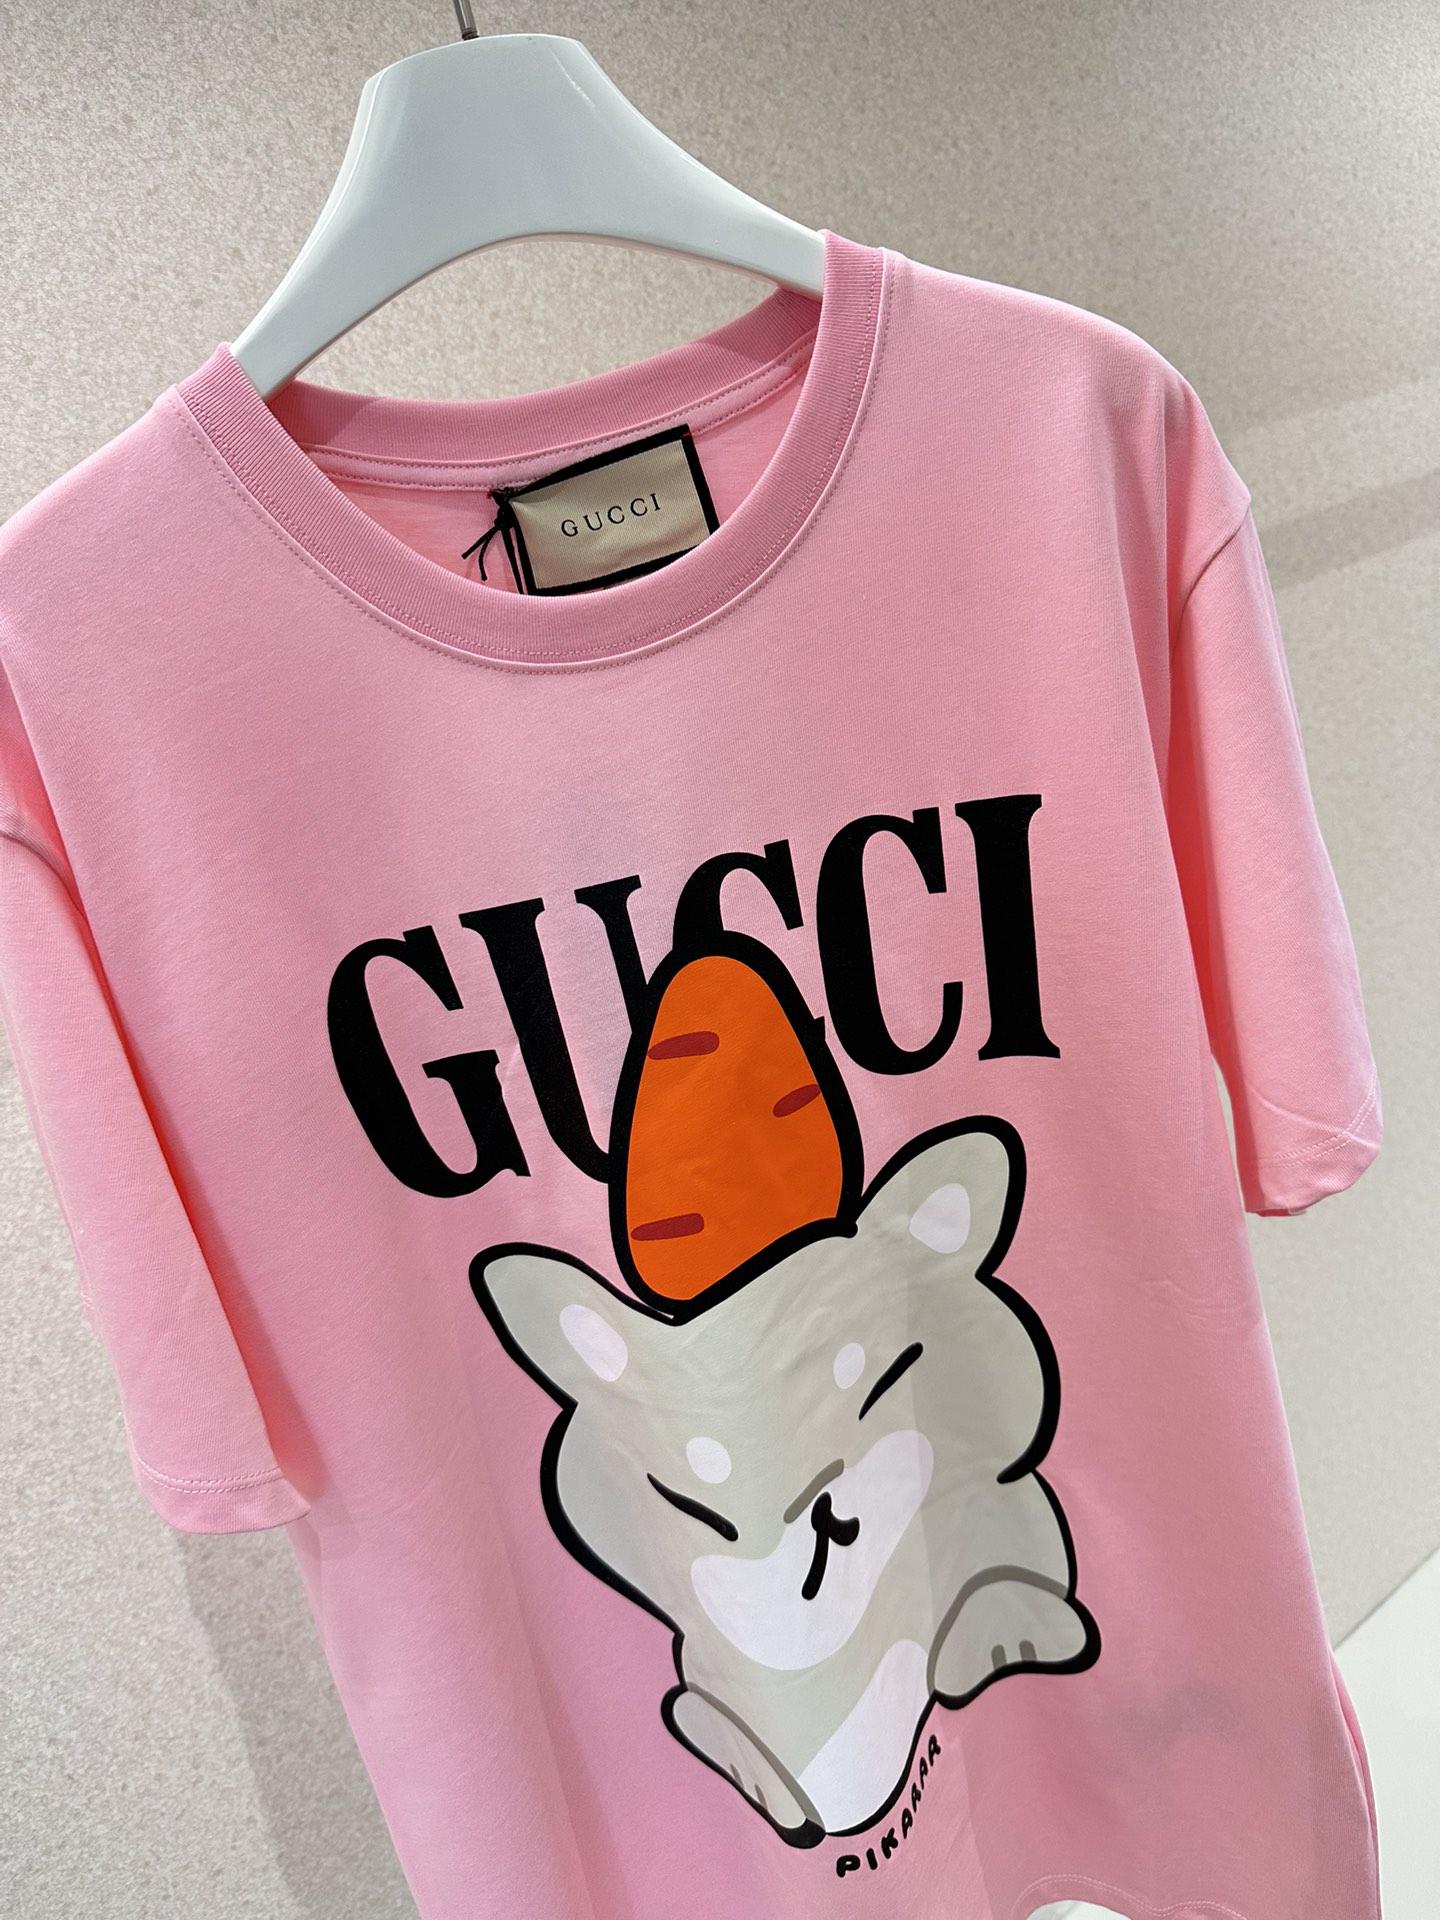 gucci-animal-print-cotton-t-shirt-7221_16844049043-1000